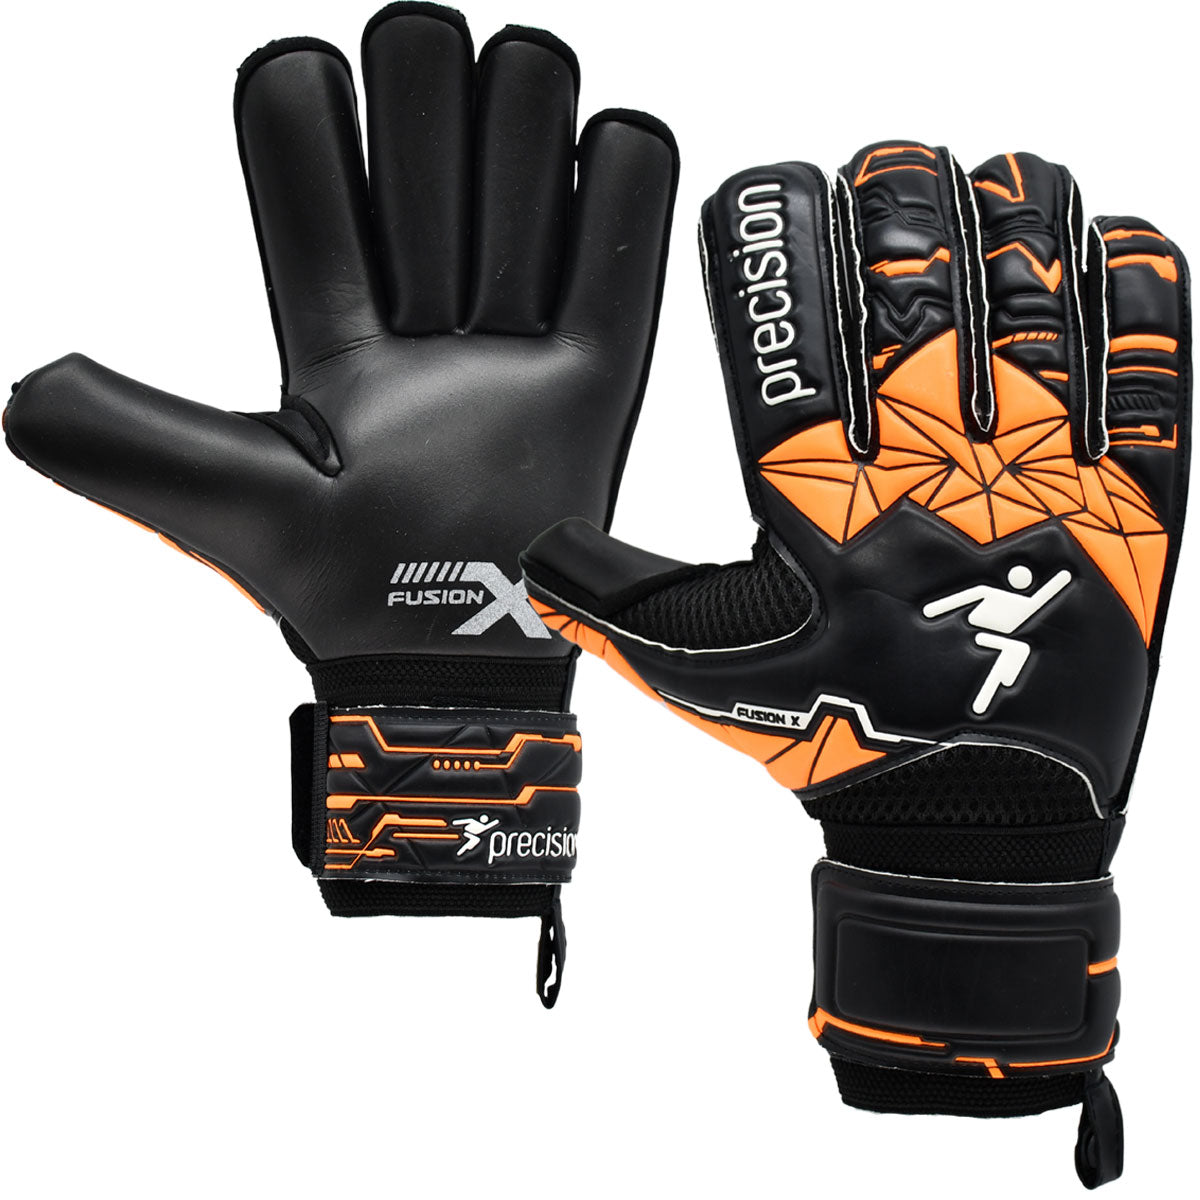 Precision Training Fusion X Roll Finger Protect Goalkeeper Gloves - Adult - Black/Orange